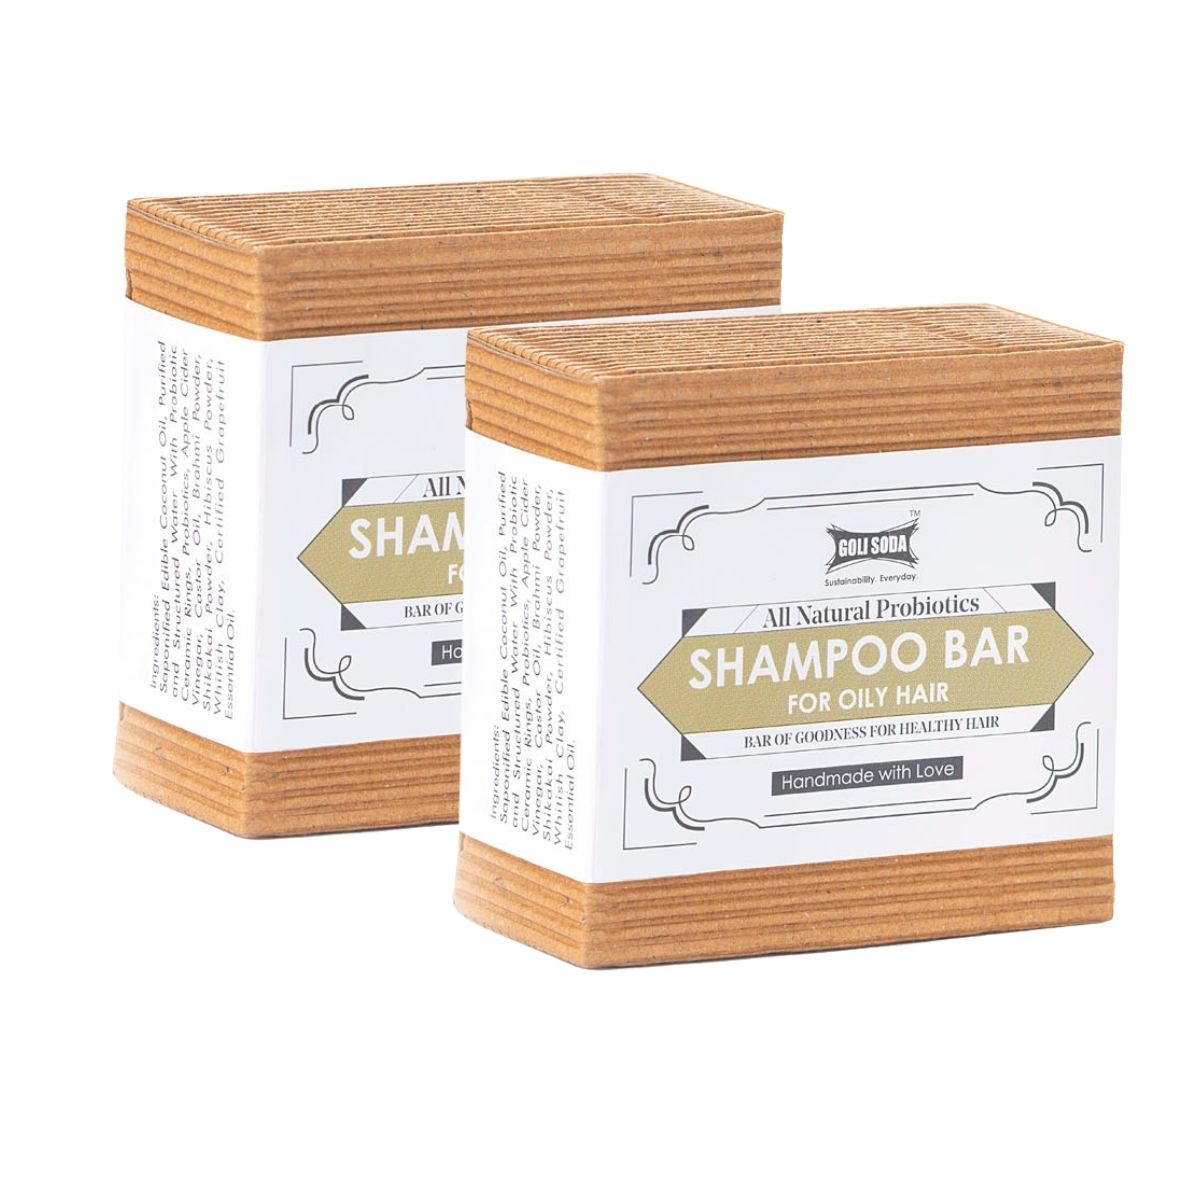 
                  
                    Goli Soda All Natural Probiotics Shampoo Bar for Oily Hair - 90 g- (Pack Of 2)
                  
                